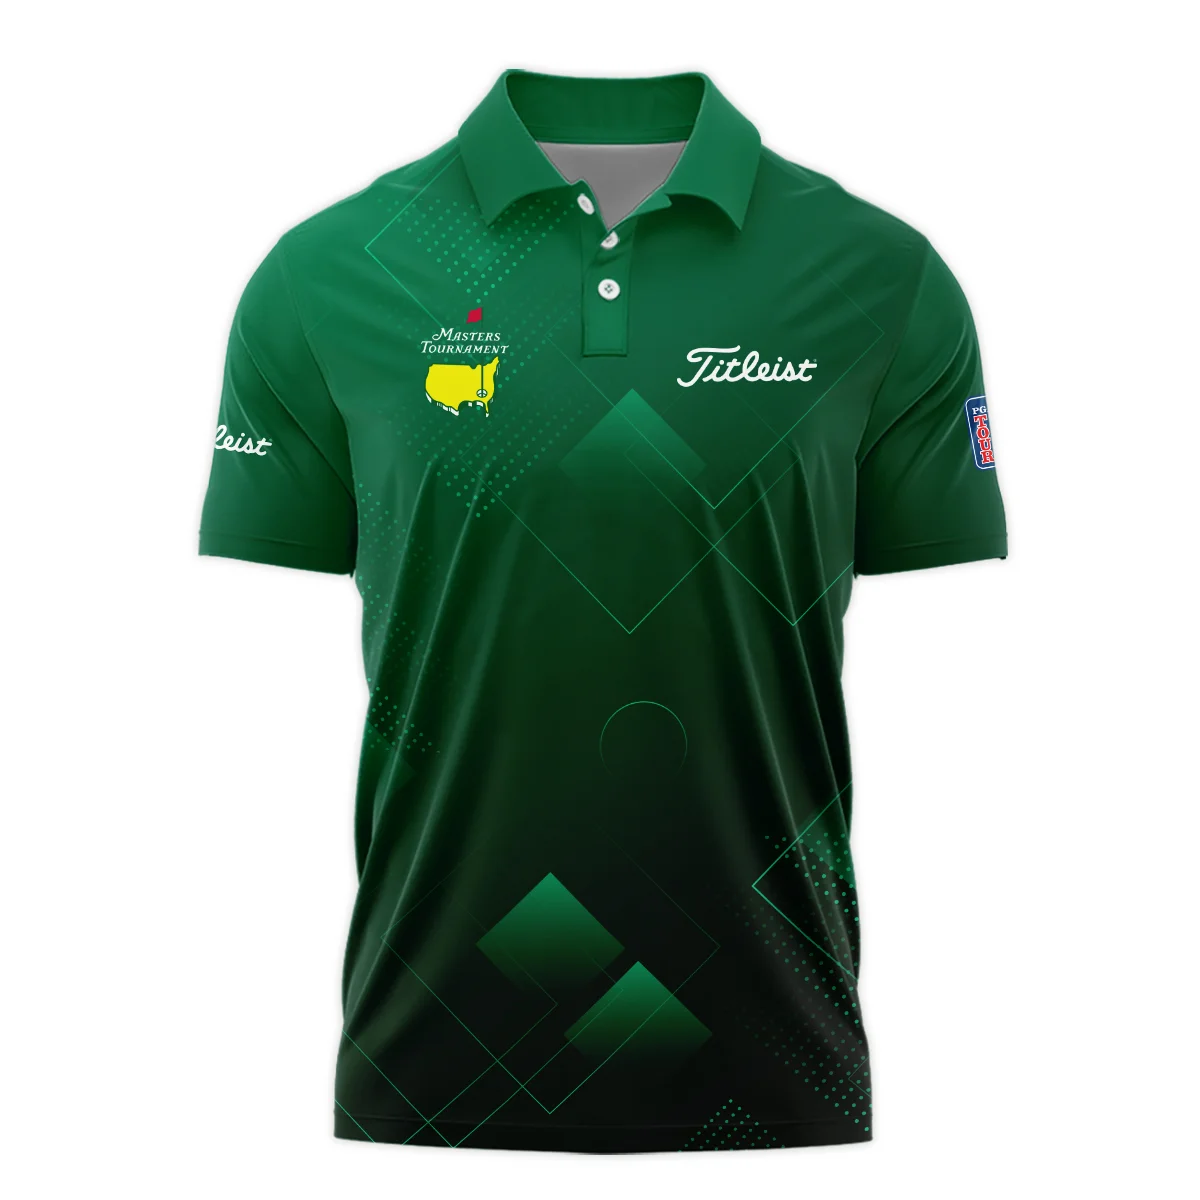 Masters Tournament Titleist Bomber Jacket Golf Sports Green Abstract Geometric Bomber Jacket